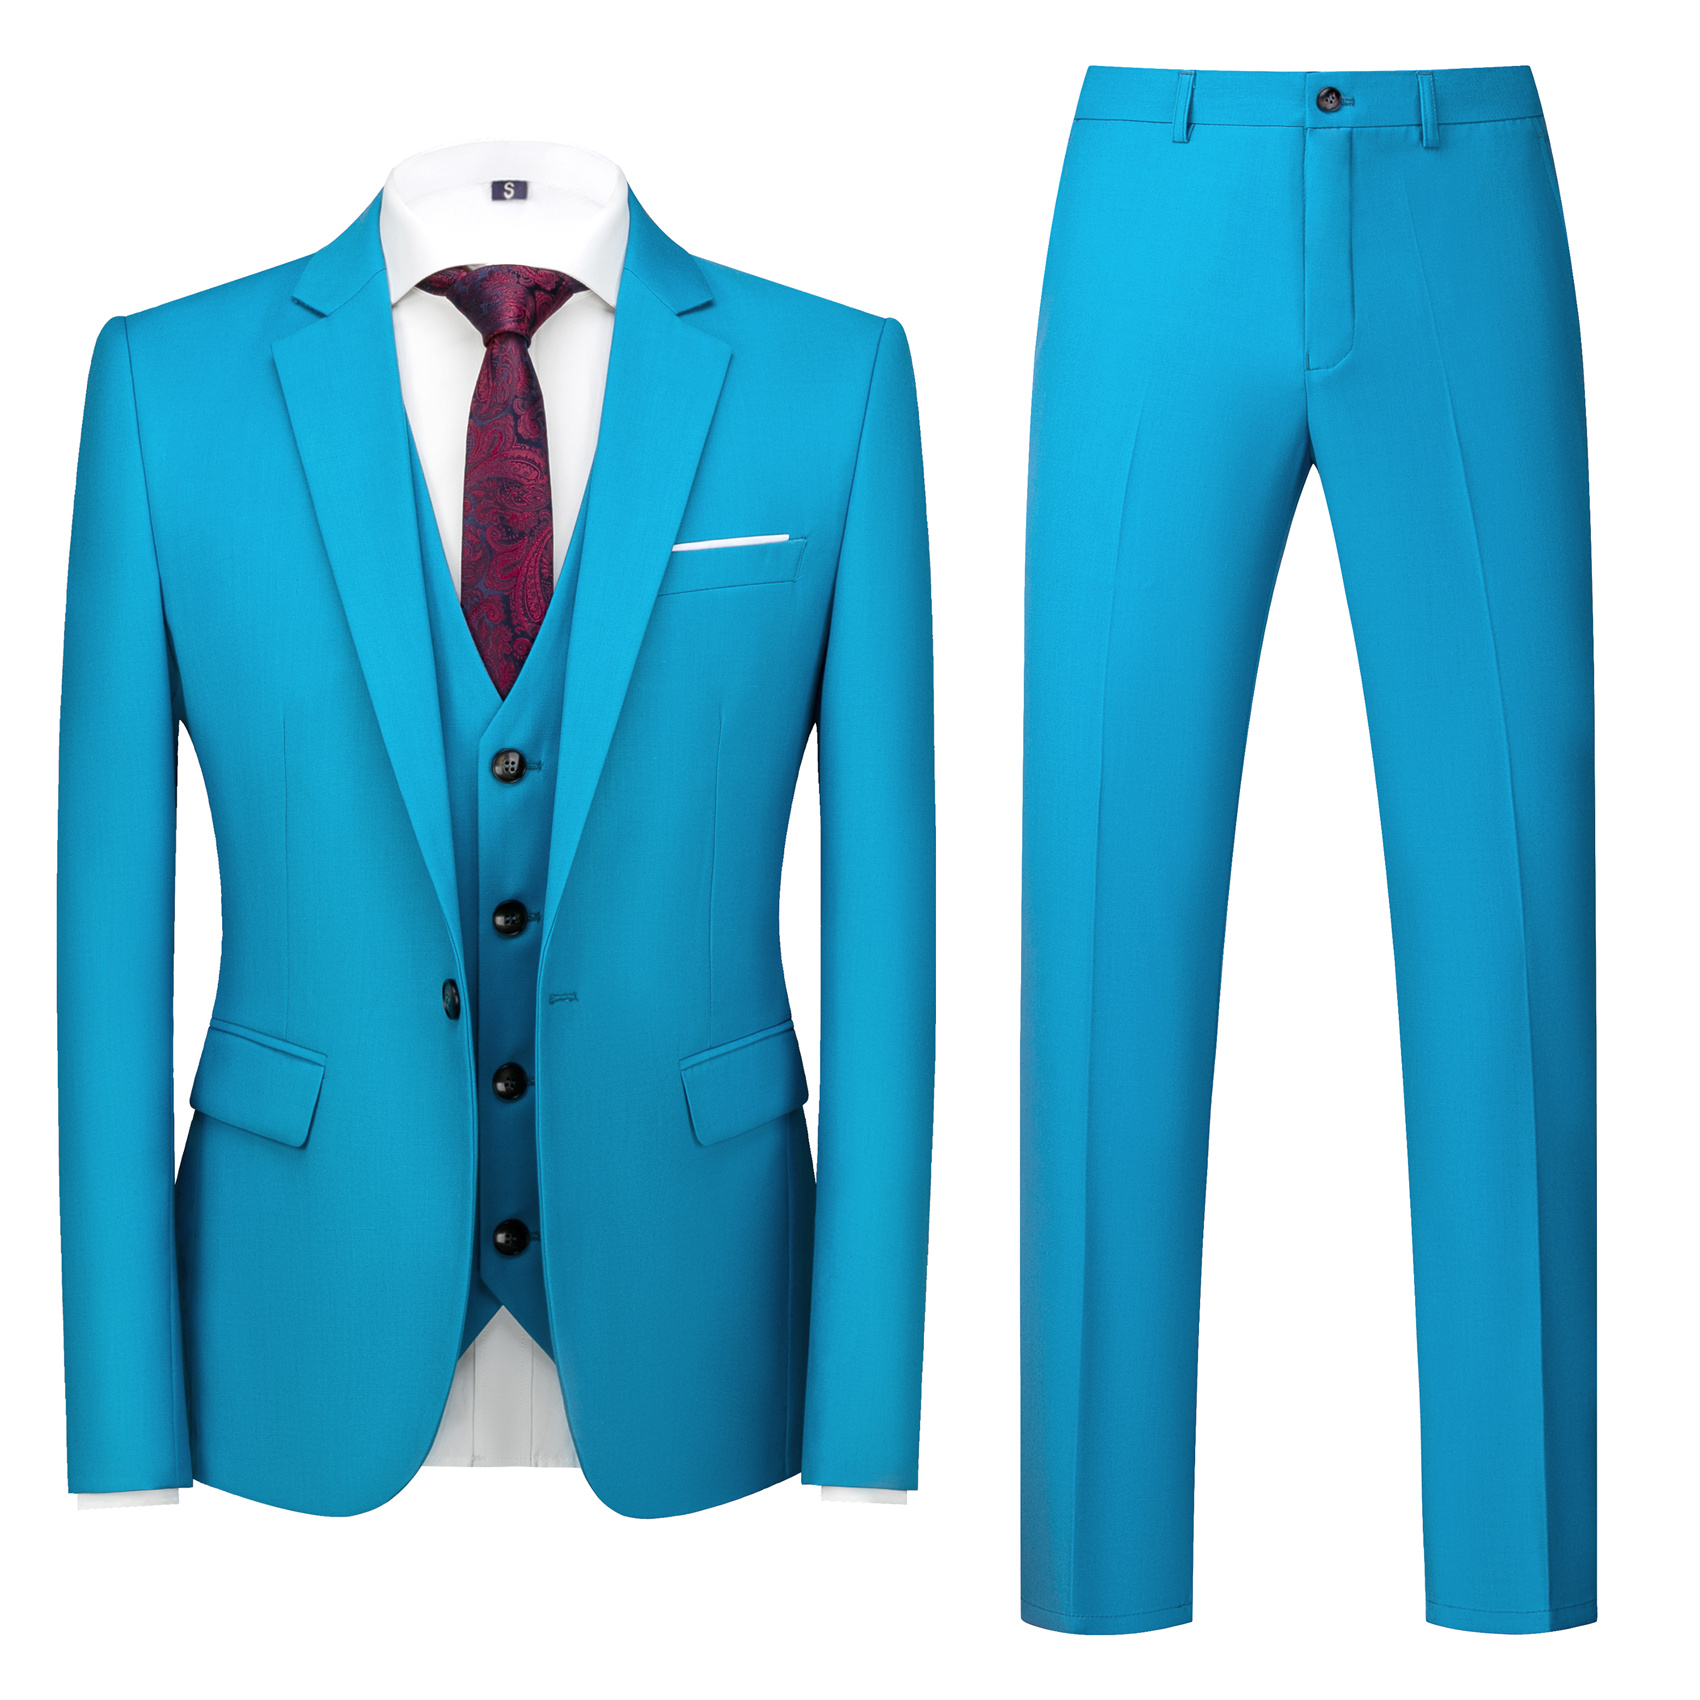 3 Piece Lake Green Suit for Men, Slim Fit (1 Button)